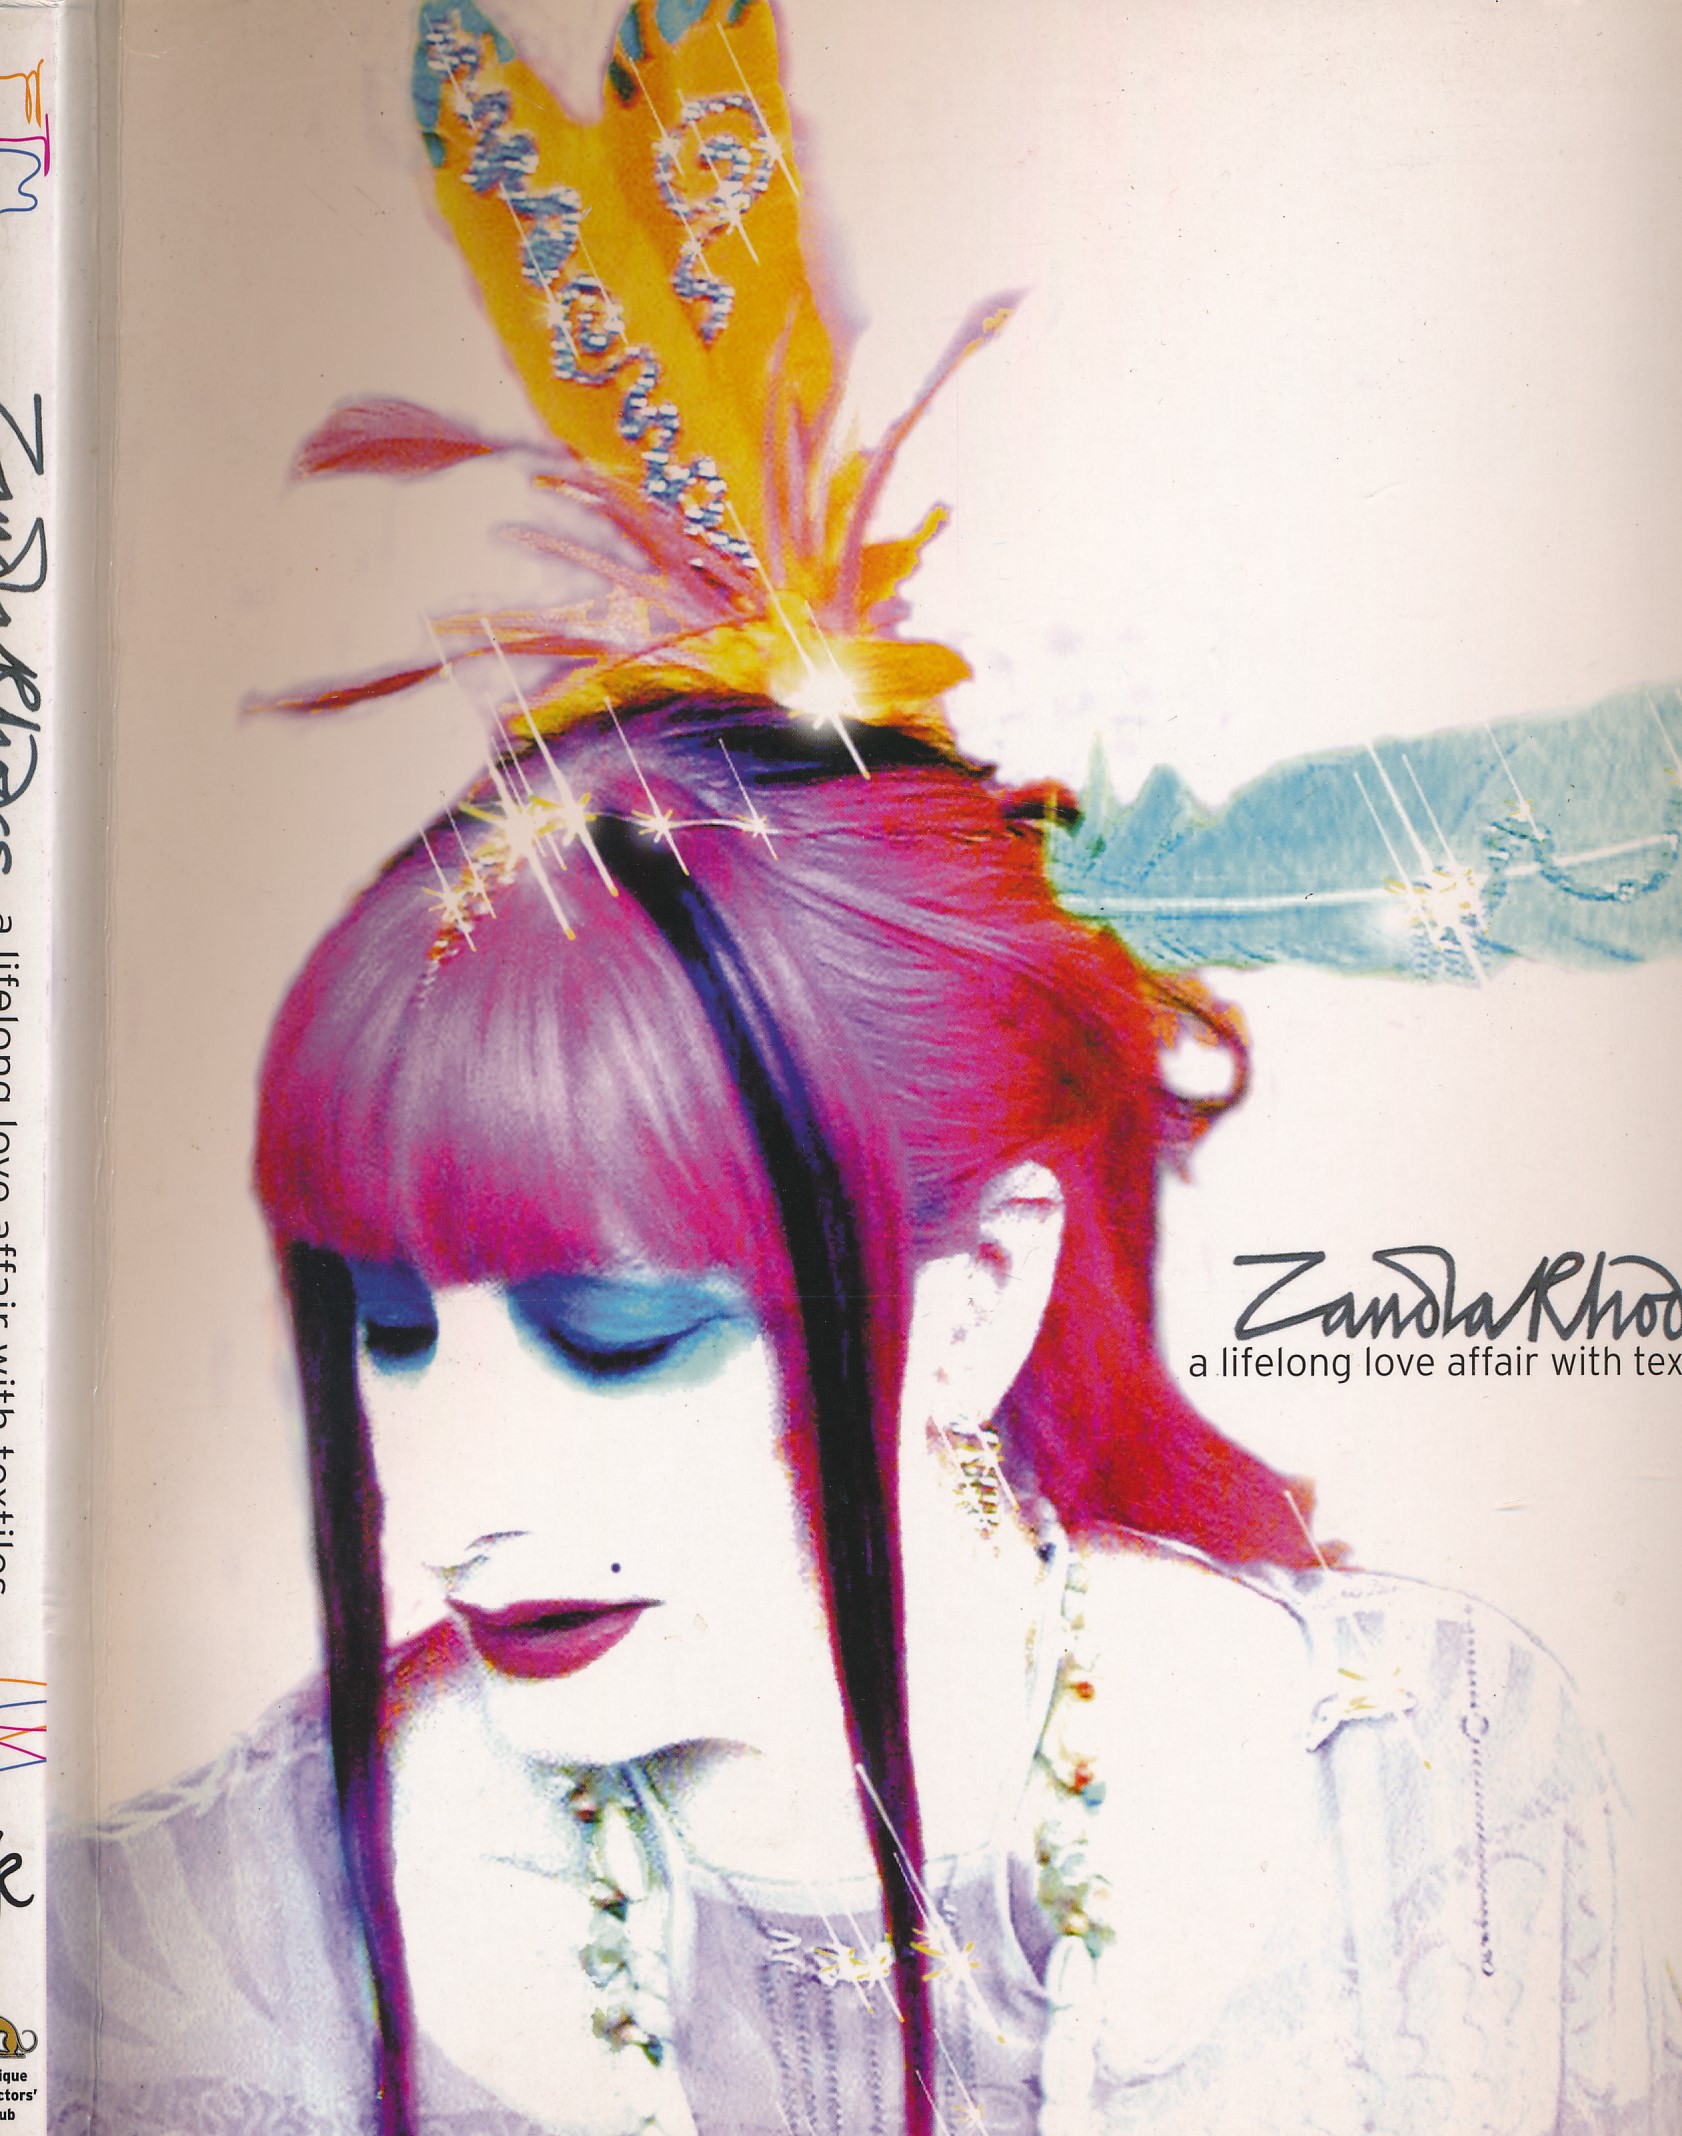 Zandra Rhodes. A Lifelong Love Affair with Textiles. Signed copy